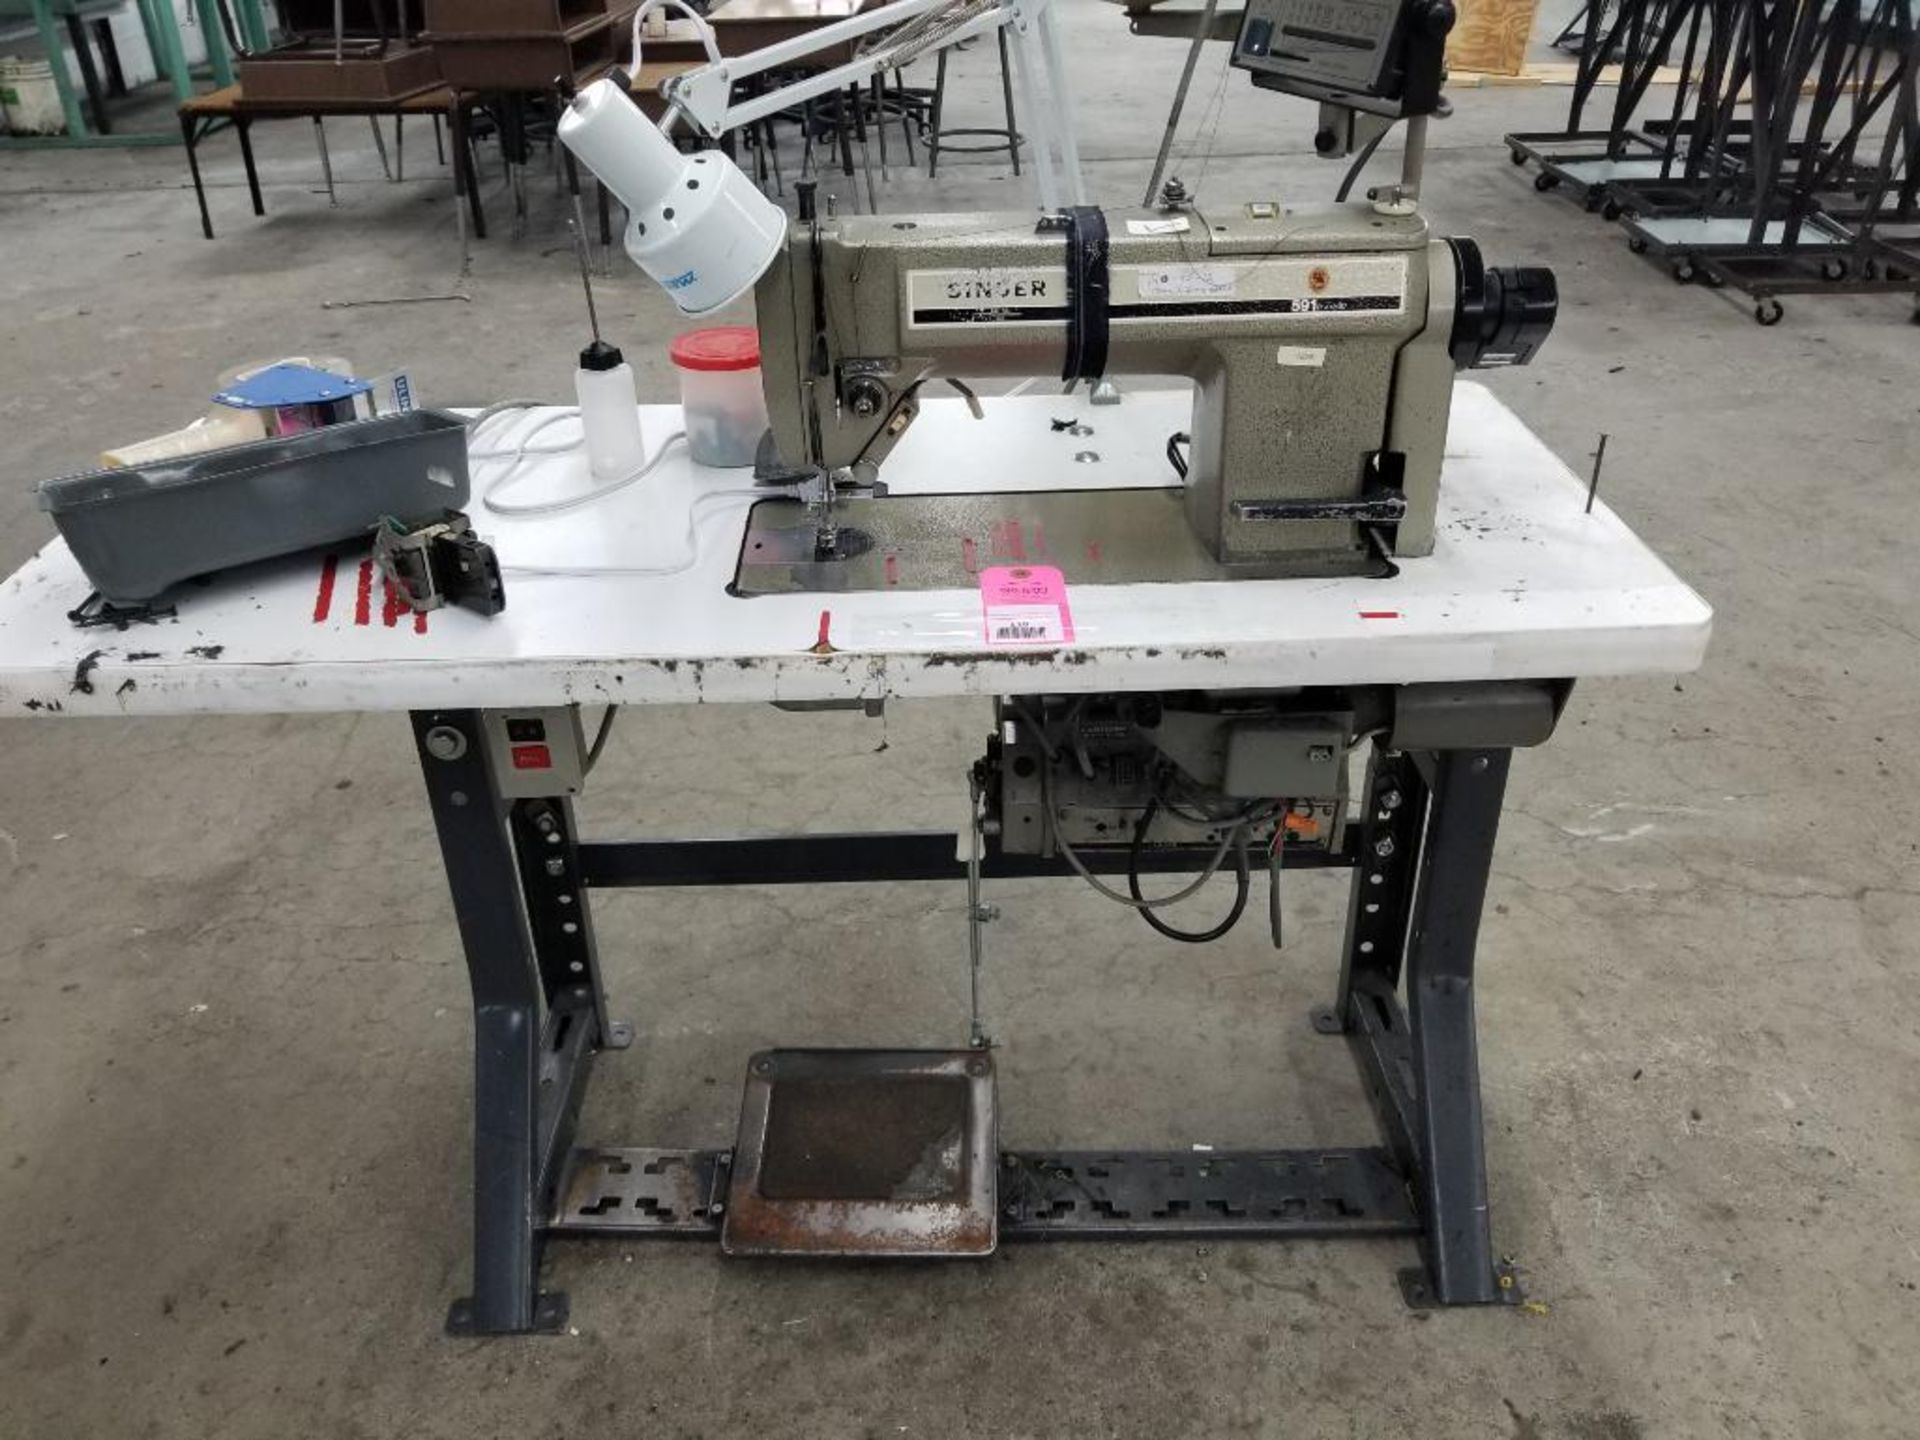 Singer single needle industrial sewing machine. Model 591. Serial #U921310412. 3 phase, 220-240v.